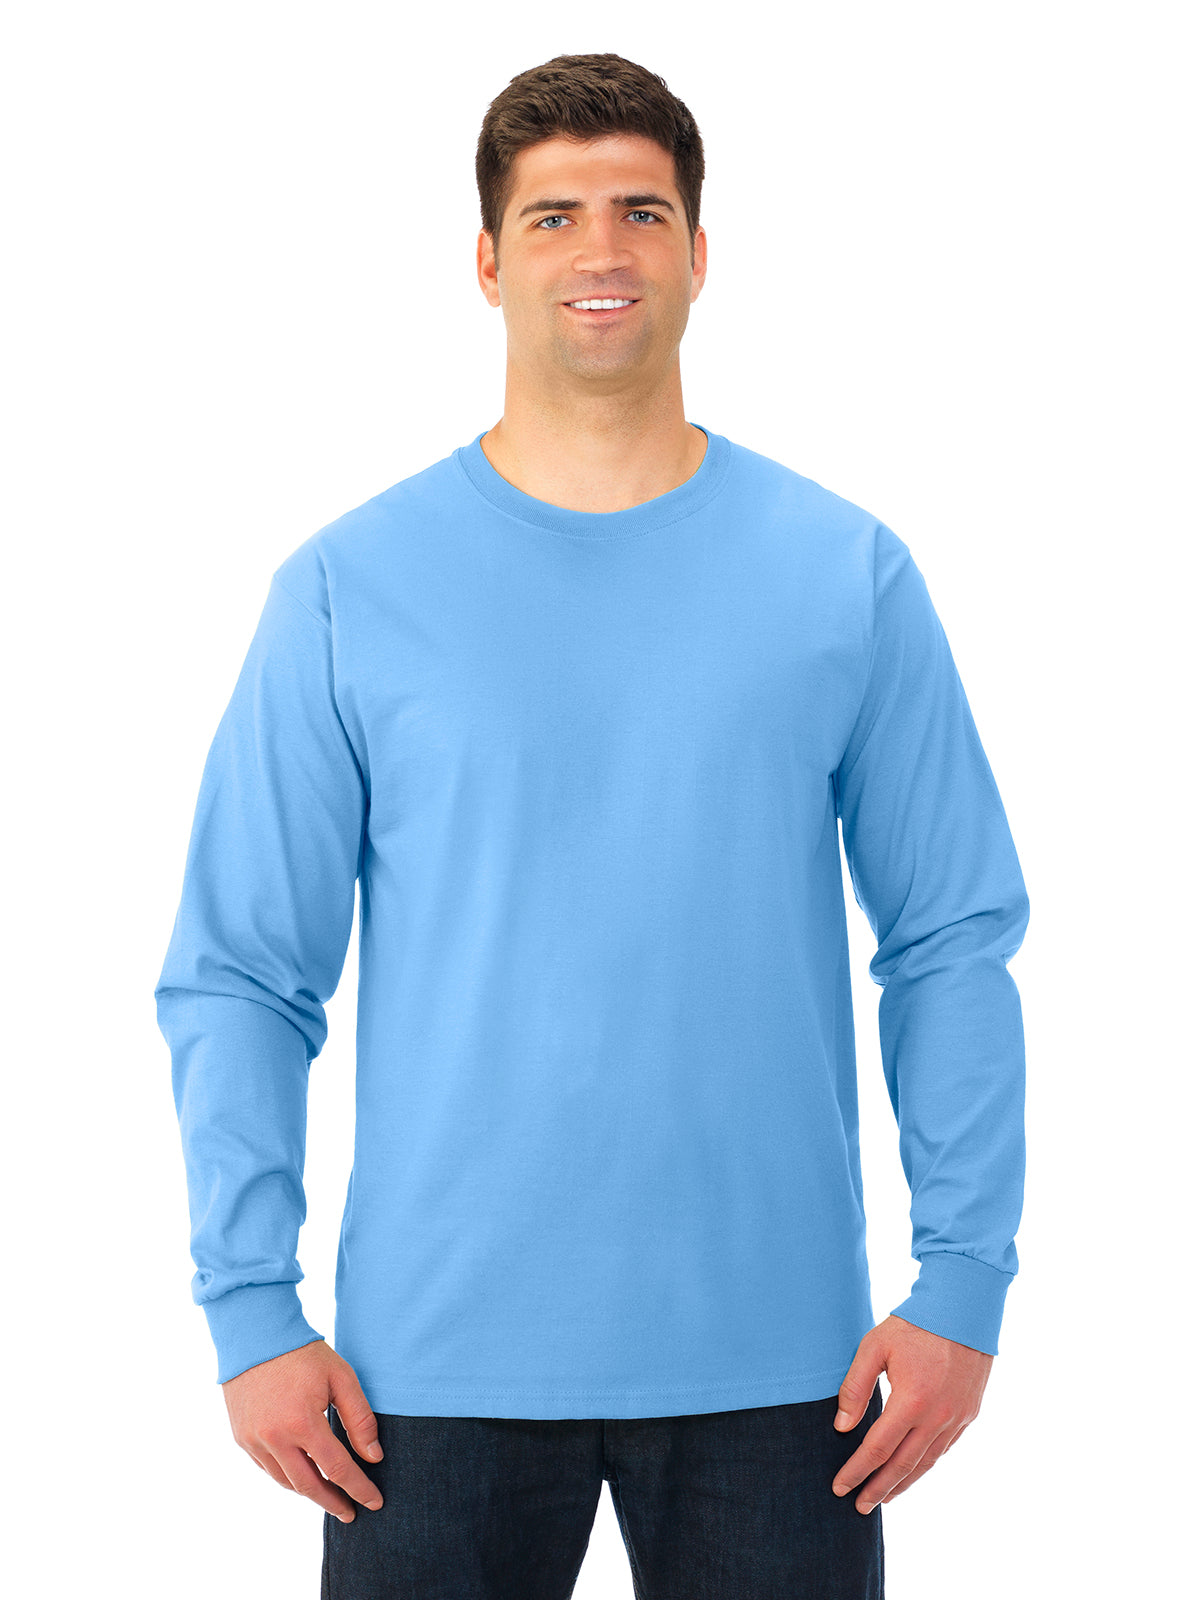 JZHD6LR - Fruit Of The Loom Mens Lofteez HD Long-Sleeve T-Shirt